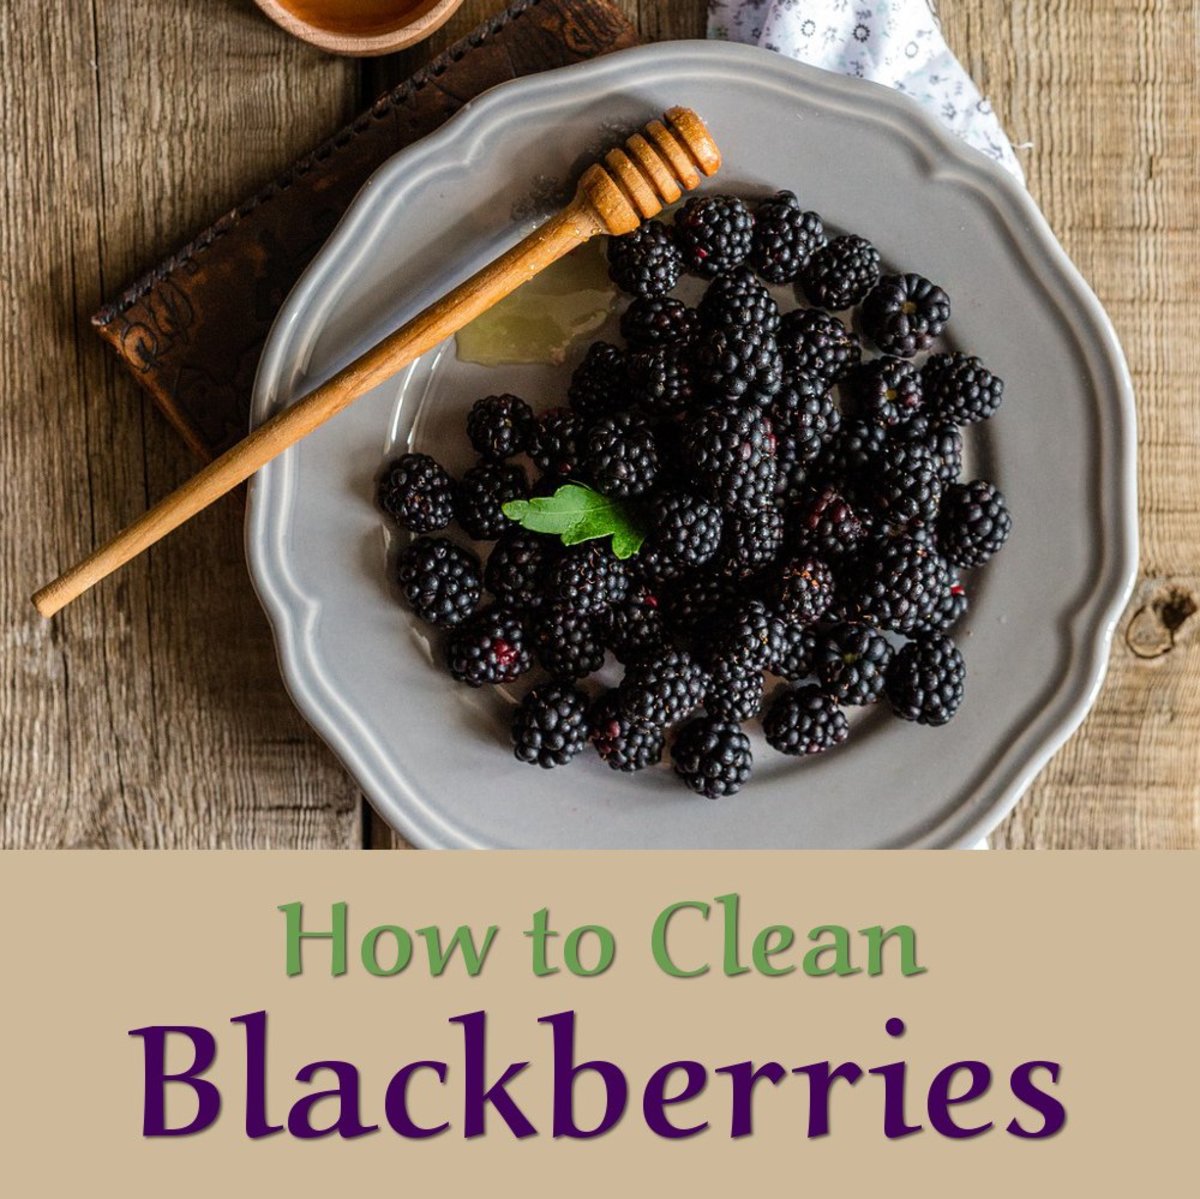 blackberries images